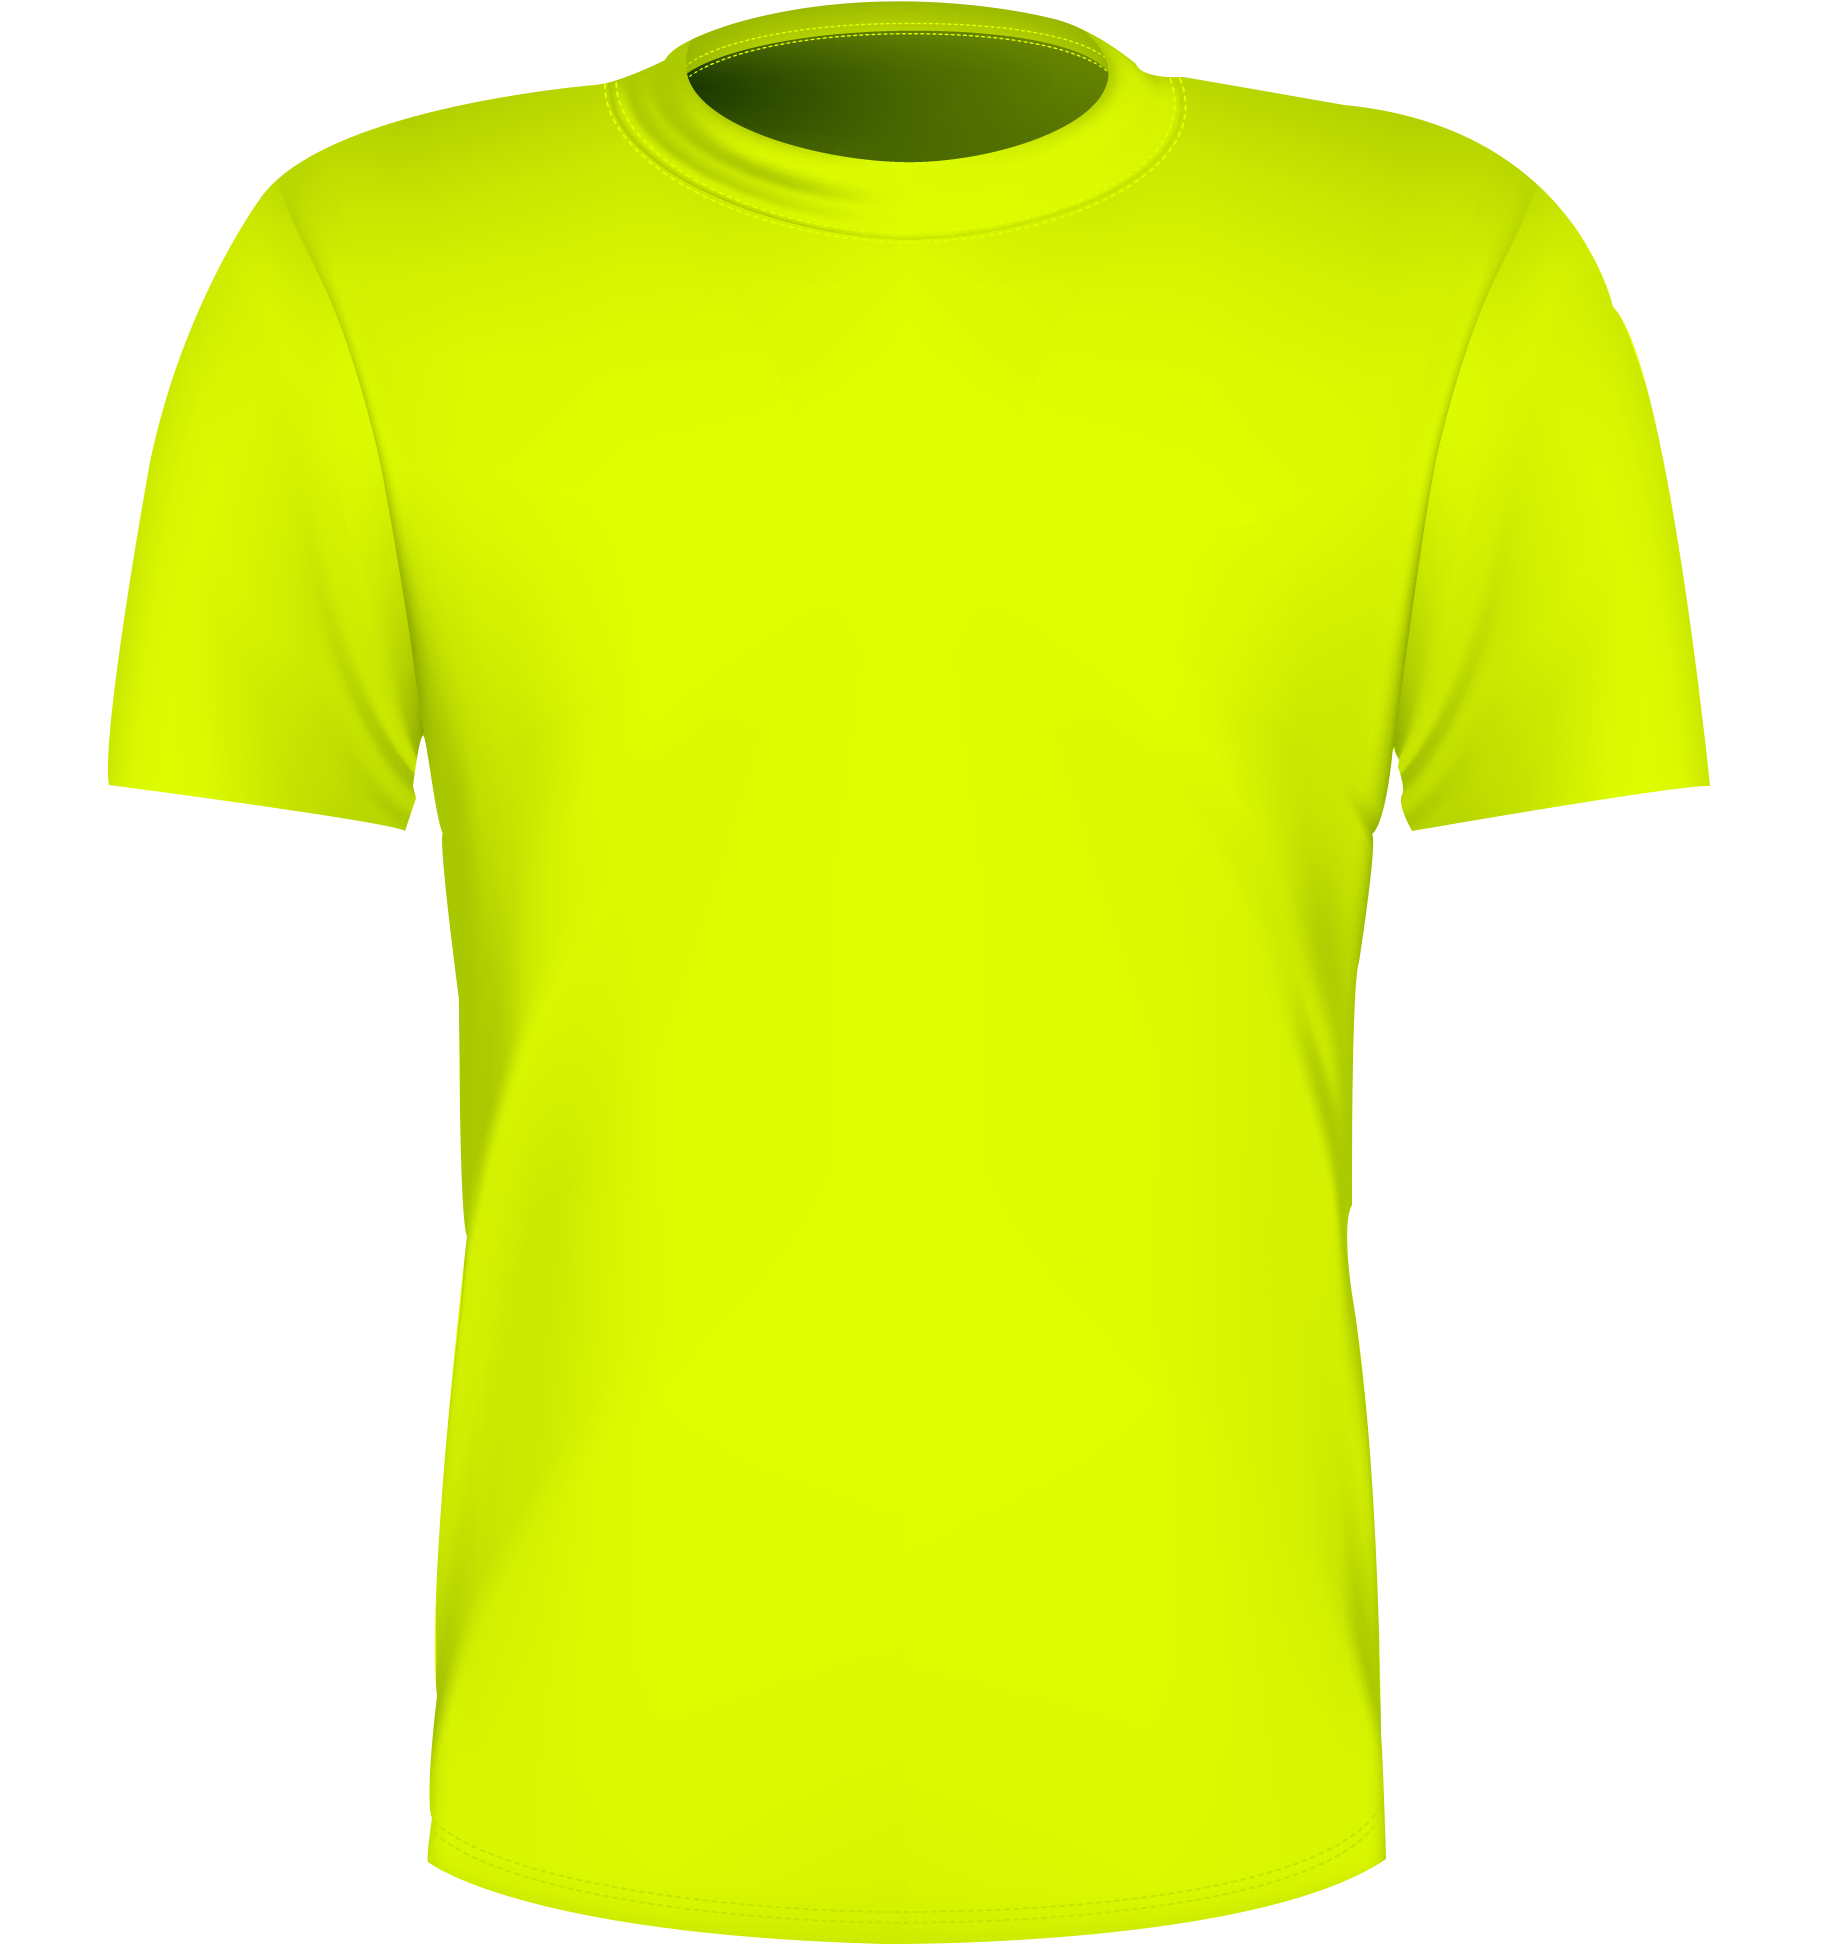 yellow shirt clipart